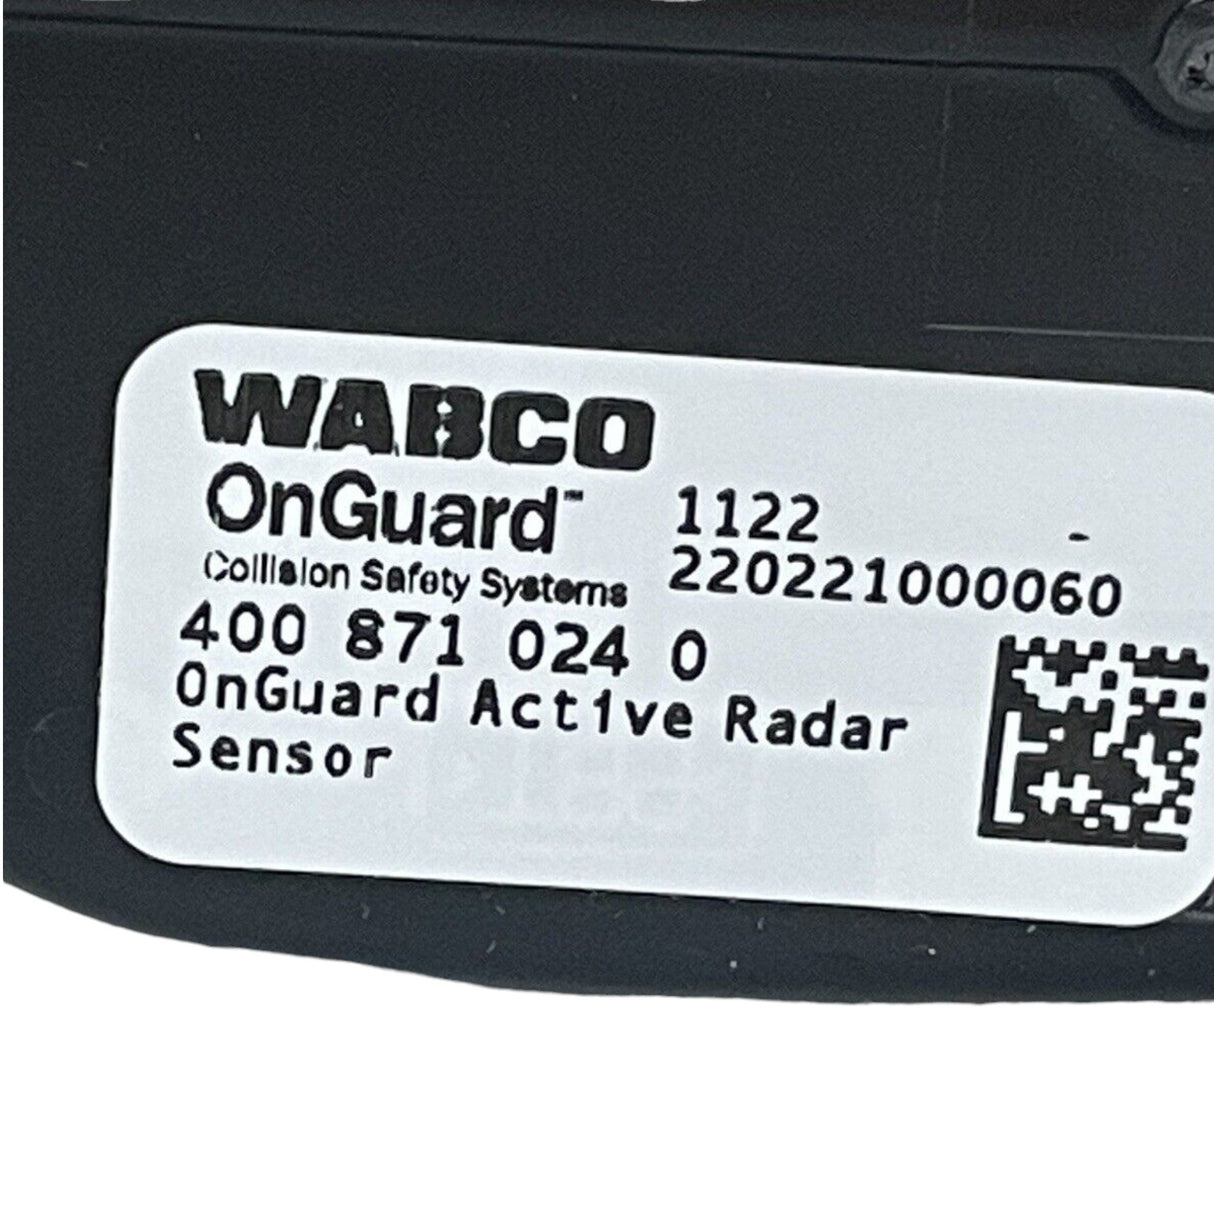 WAB 400 871 024 0 Genuine Wabco Active Radar P3